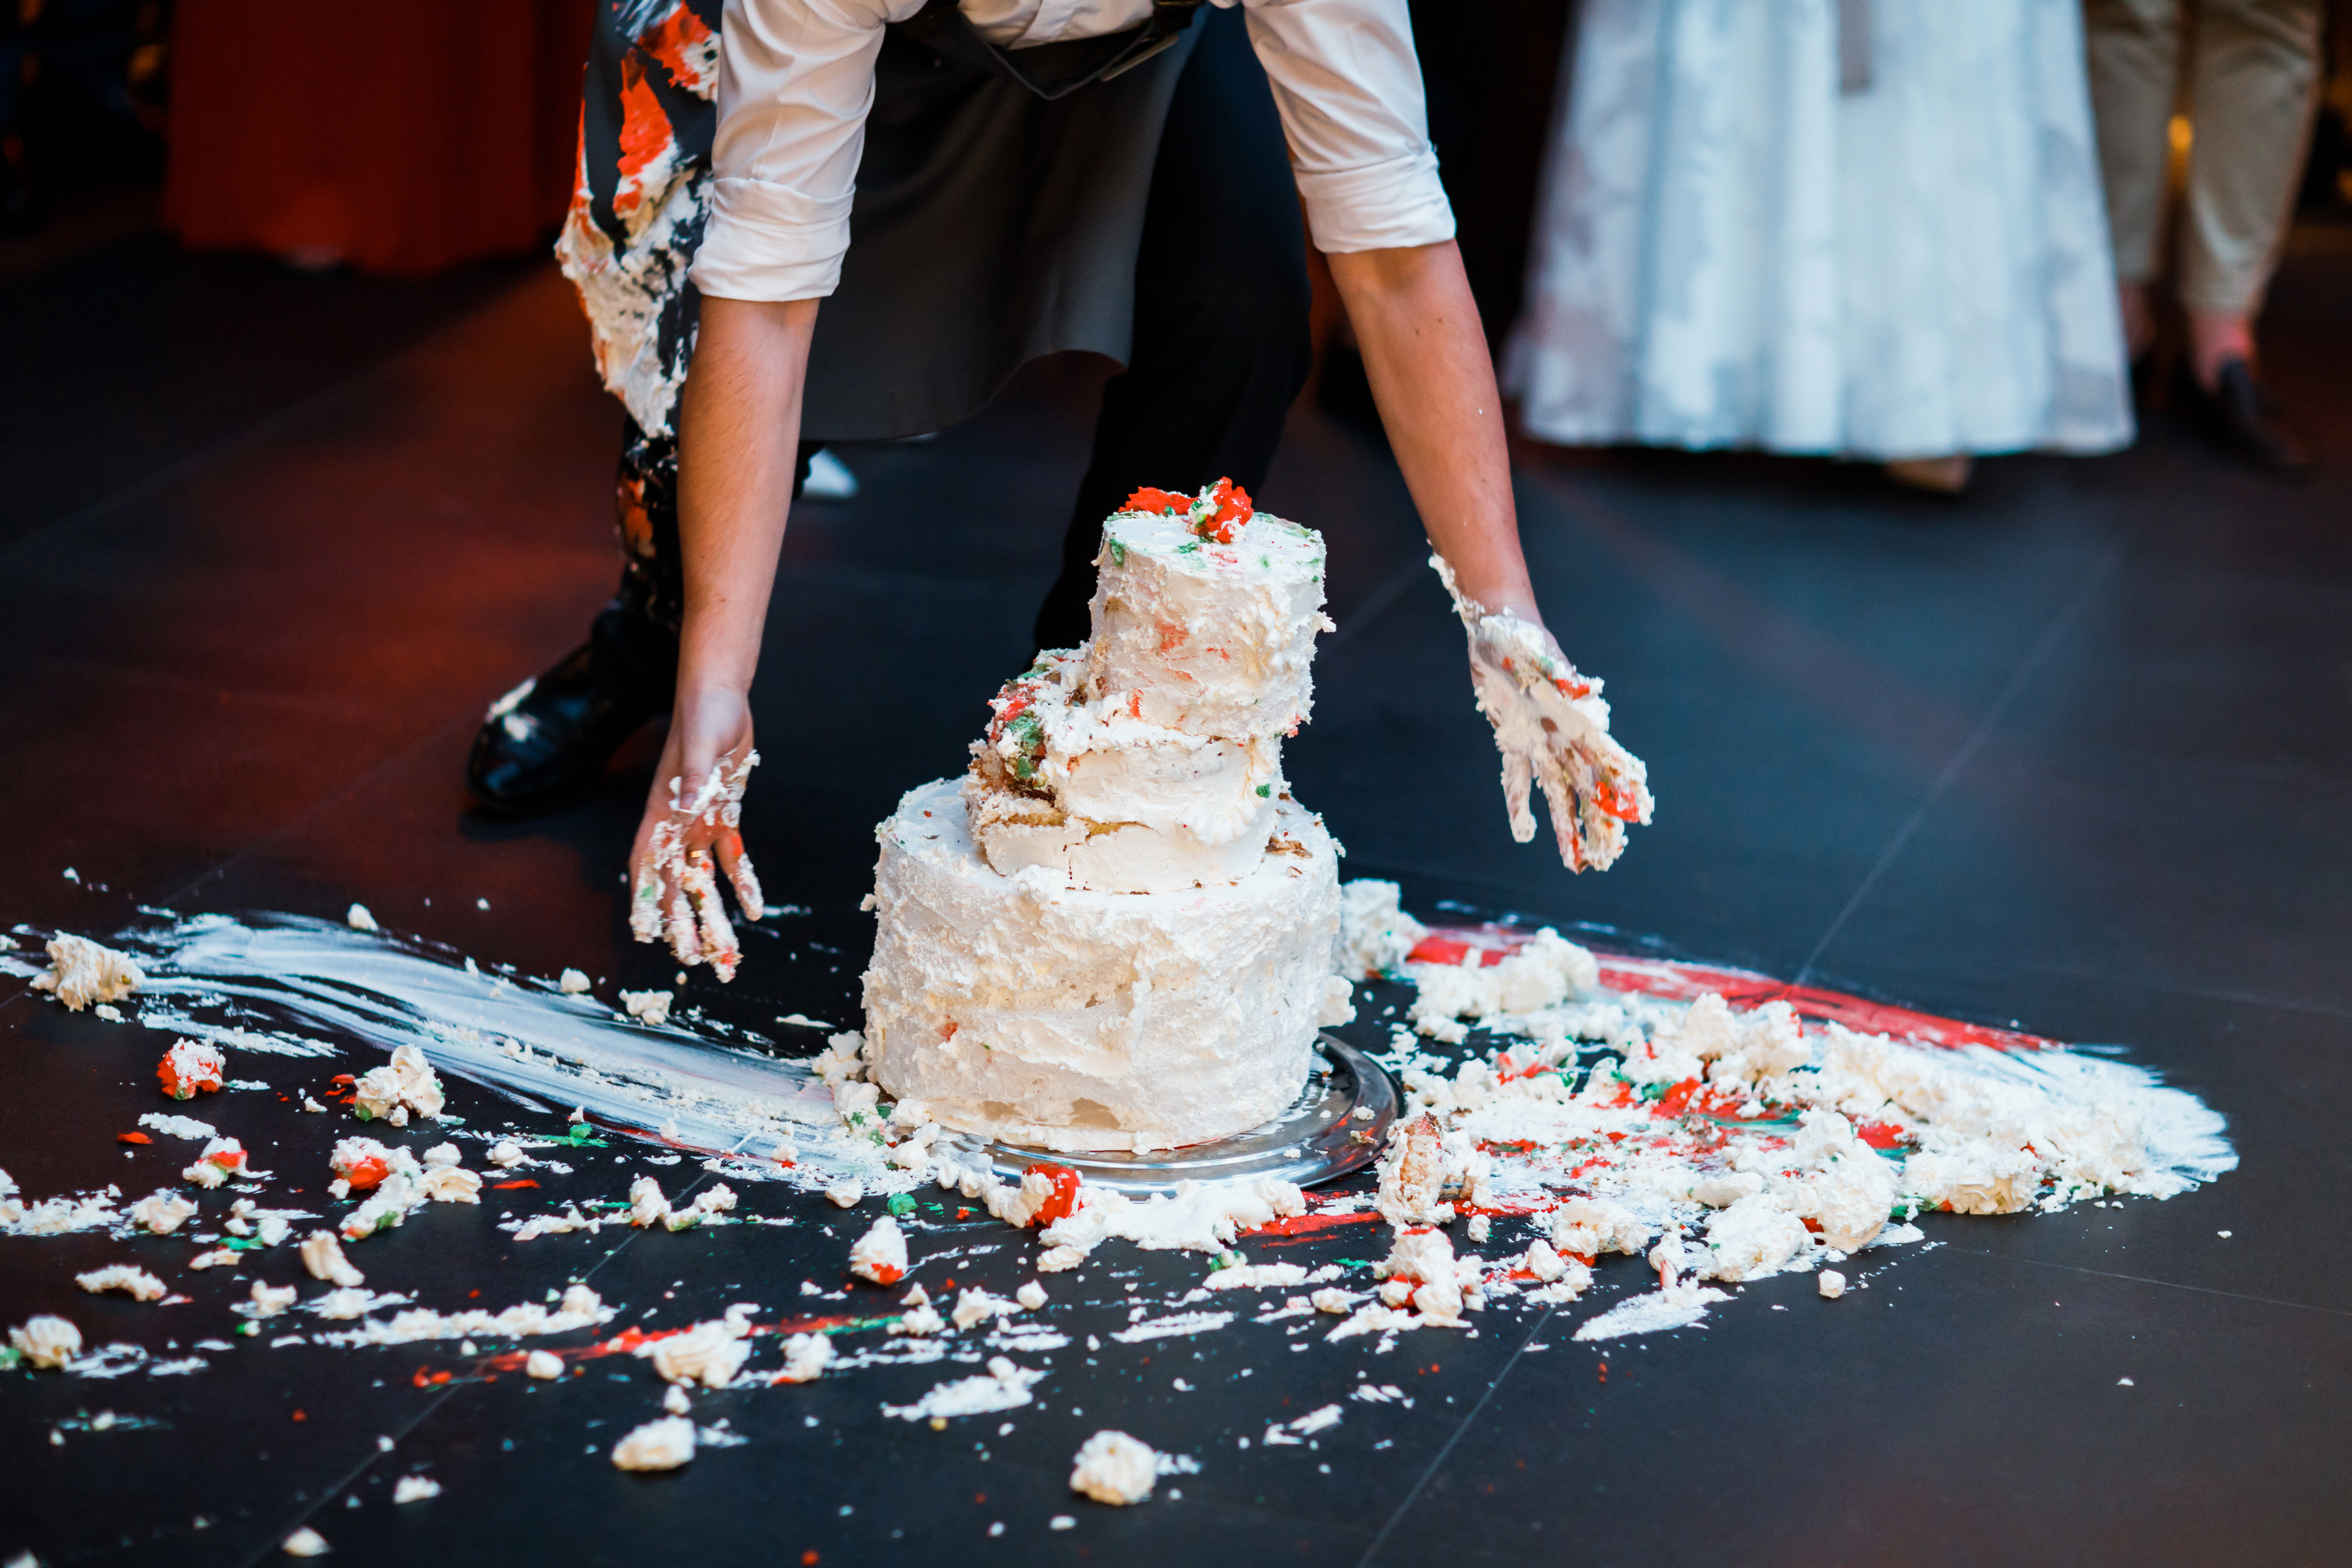 Cake dropped down | Shutterstock